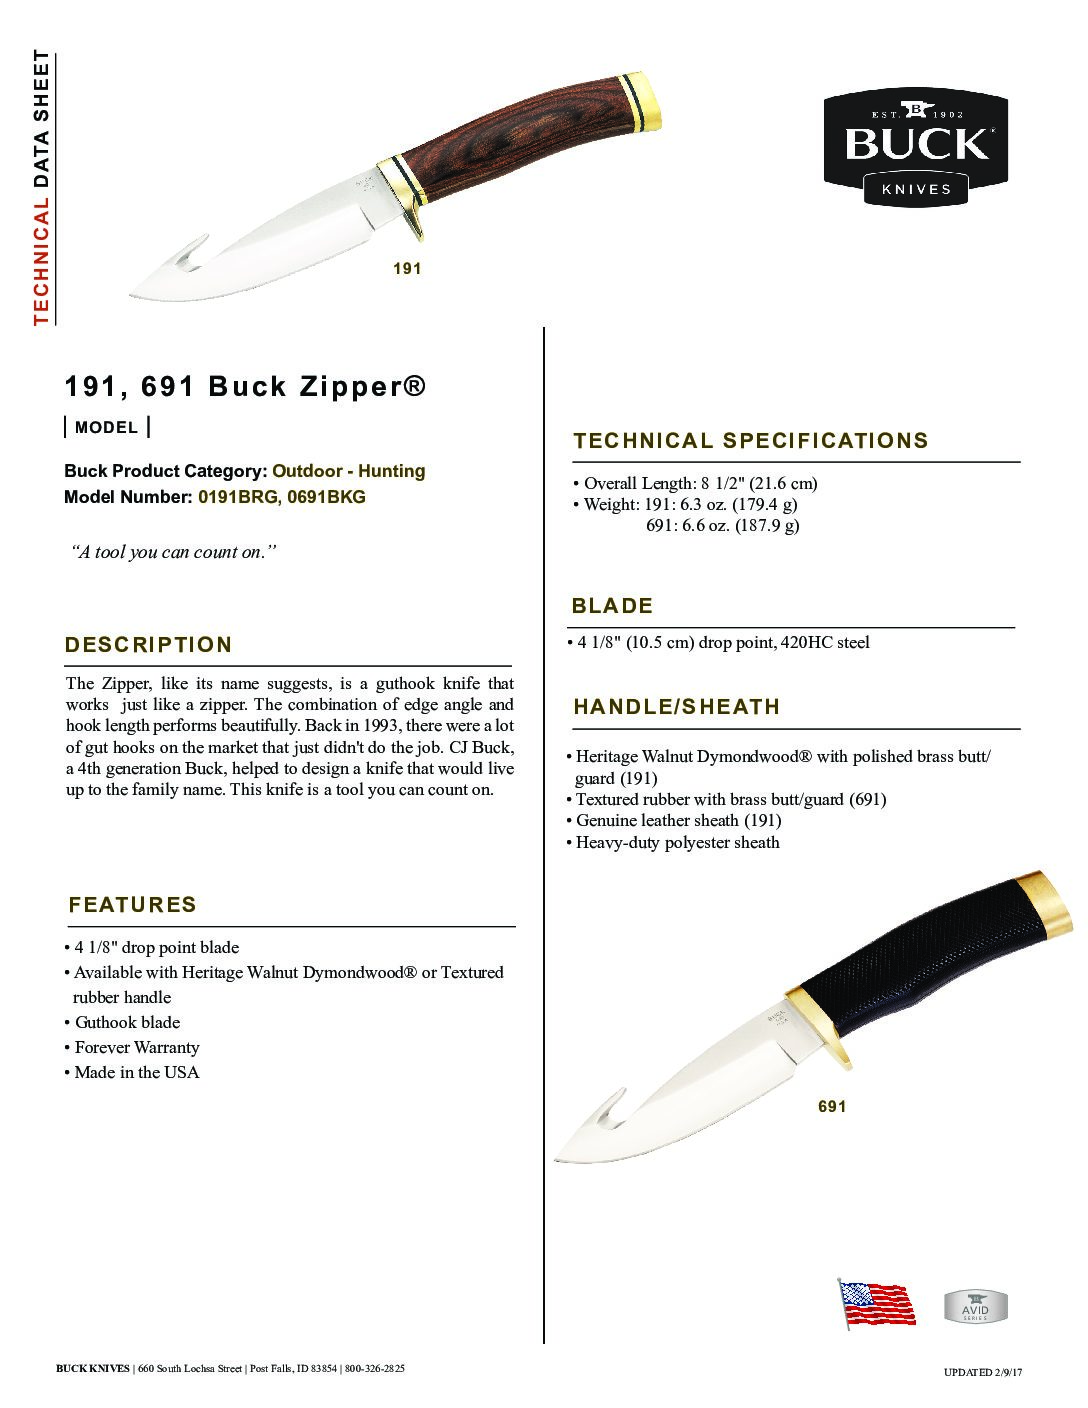 Buck Knives 191 Zipper Guthook Fixed Blade Knife W/ Sheath 0191BRG 